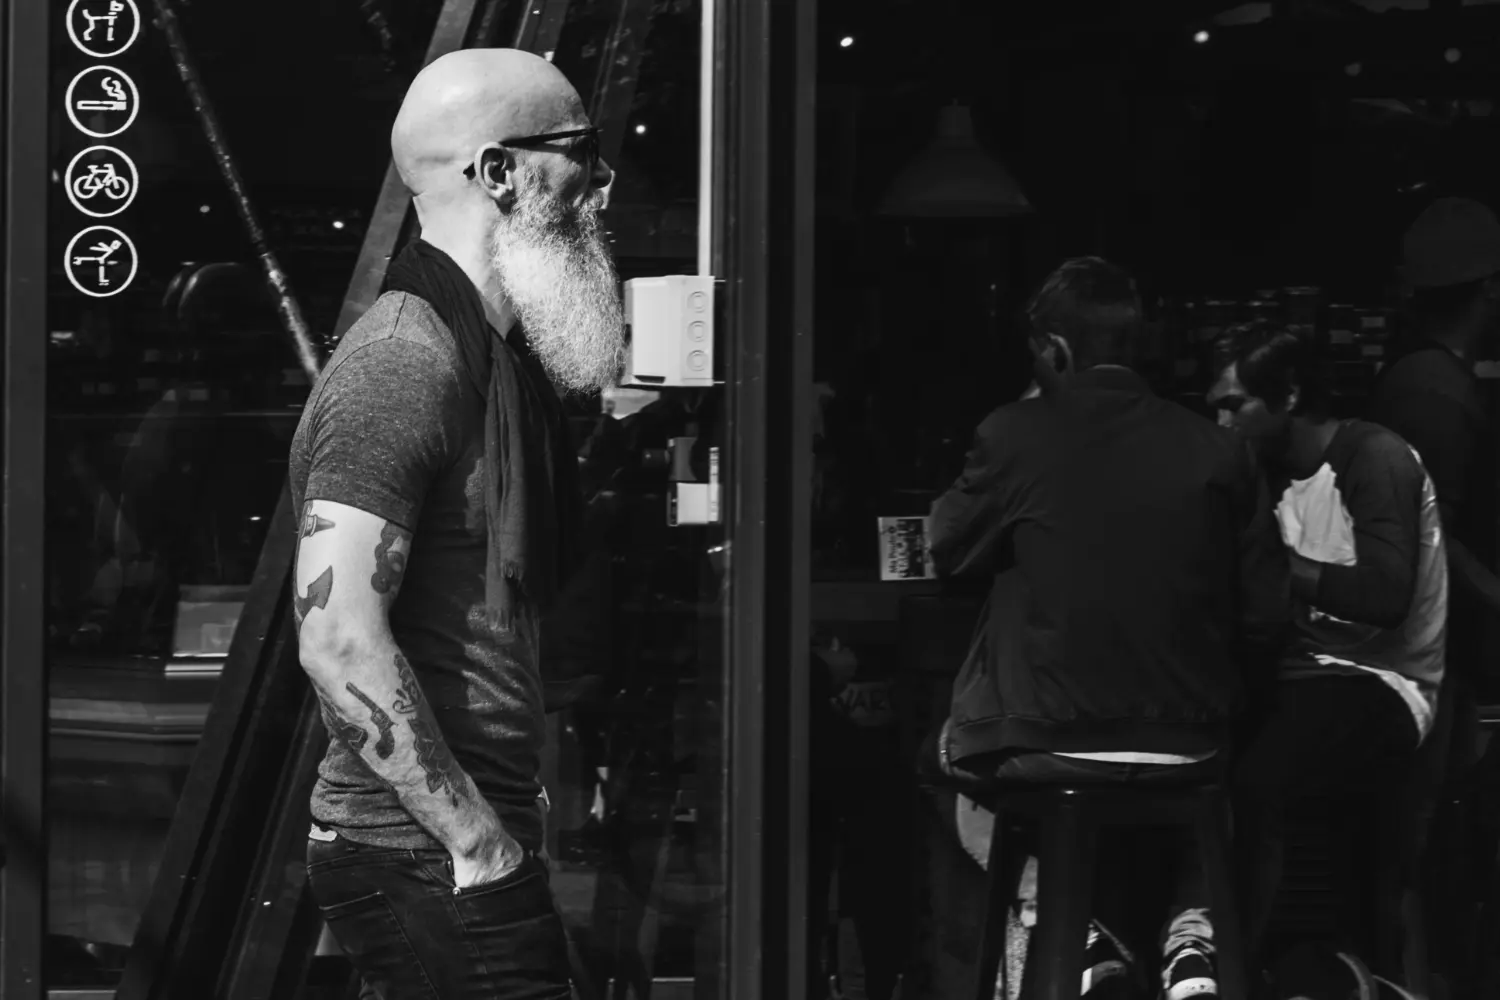 bald man walking with beard